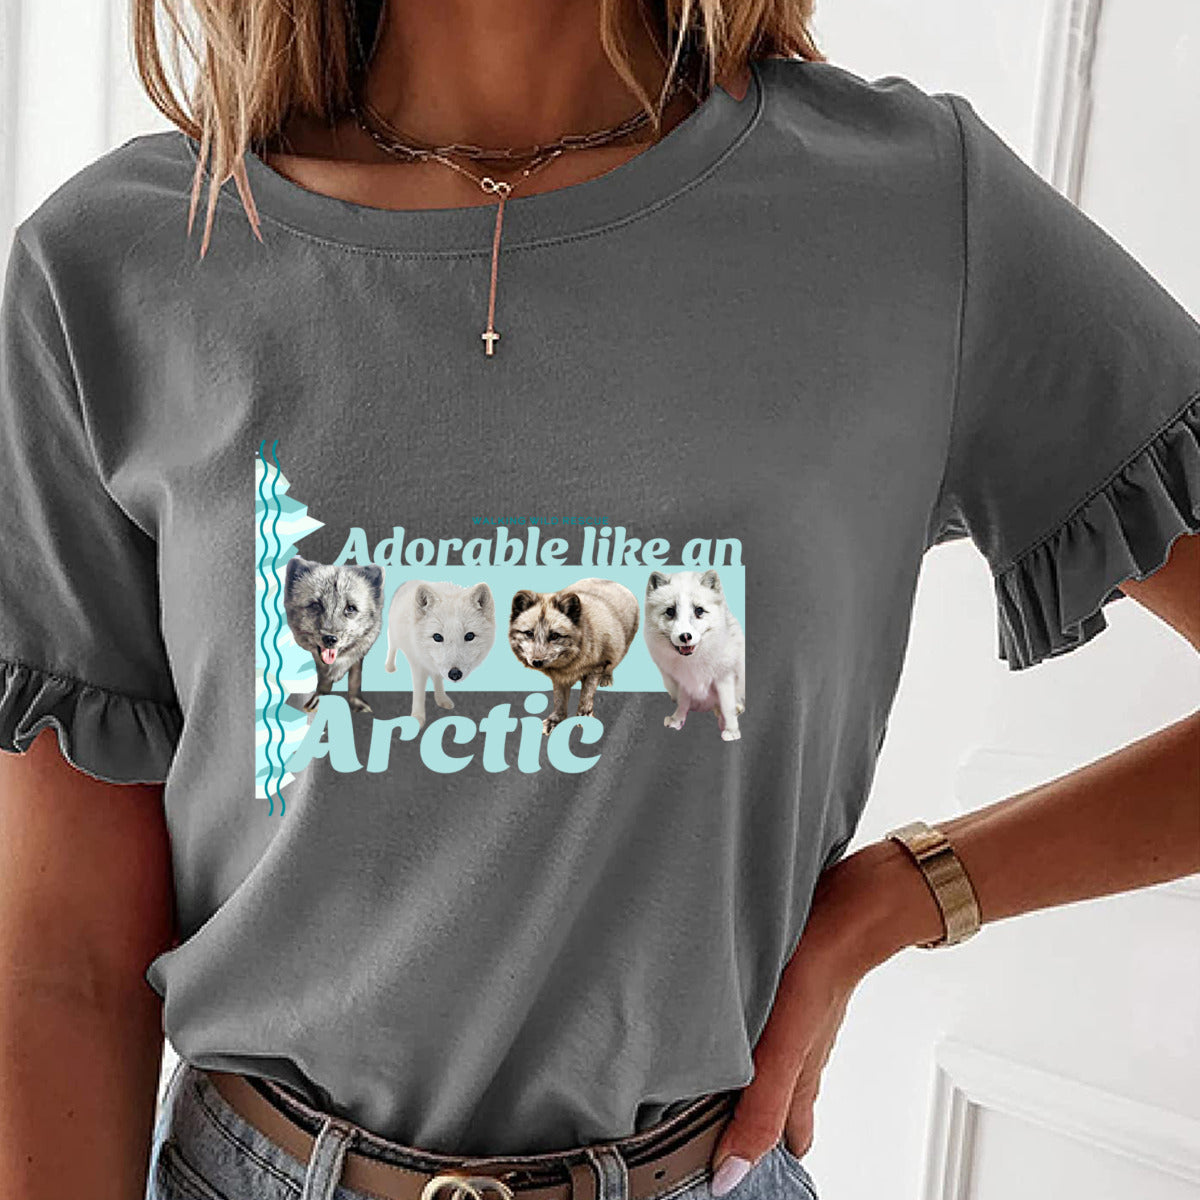 Adorable Like an Arctic Women's Shirt